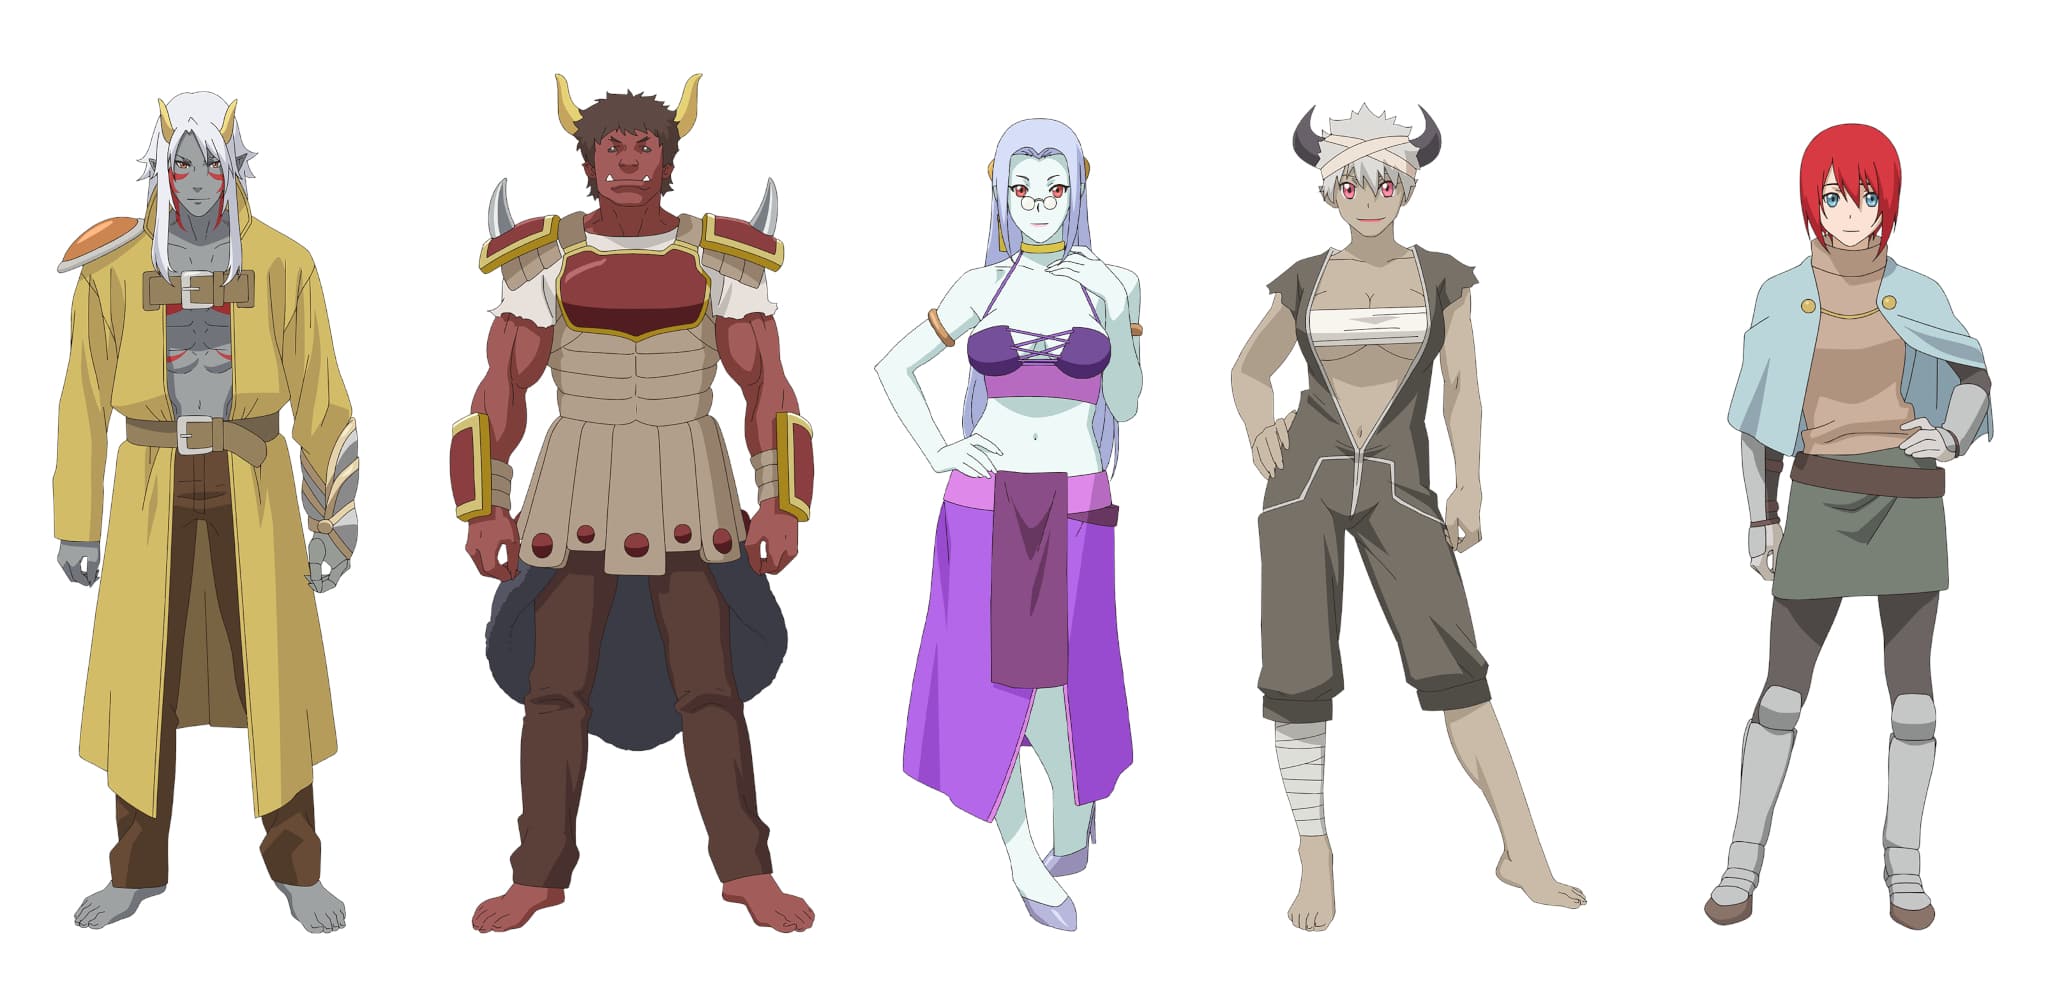 Character design de Gobrou, Gobkichi, Gobmi, Gobe et Redhead pour l'anime Re:Monster